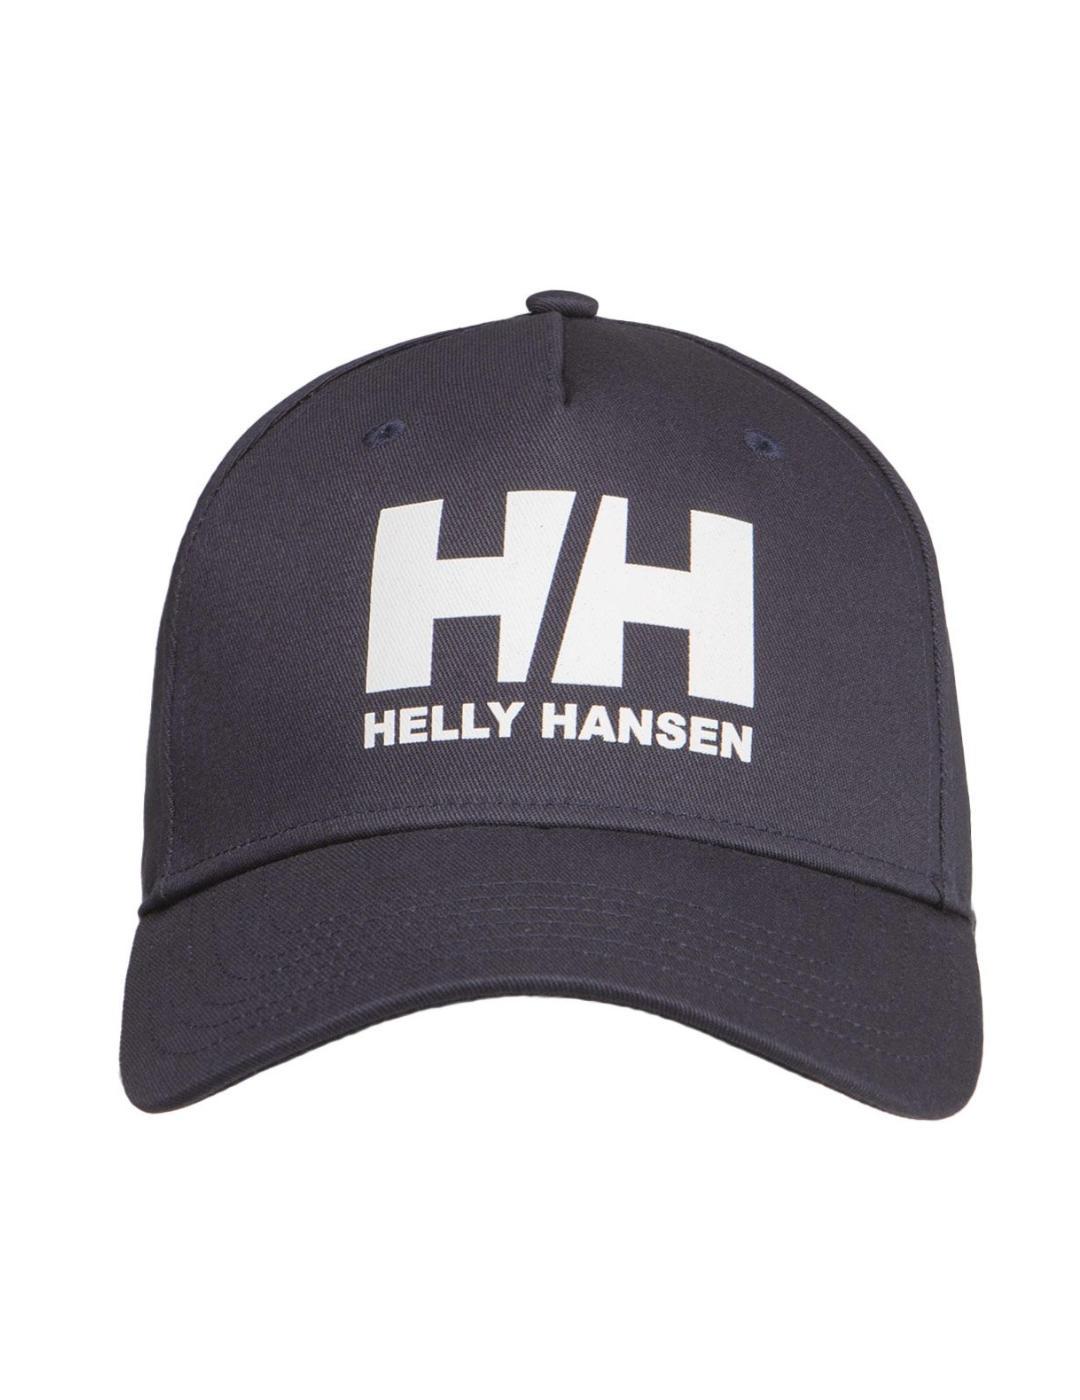 Gorra Helly Hansen Ball cap azul marino con snapback unisex